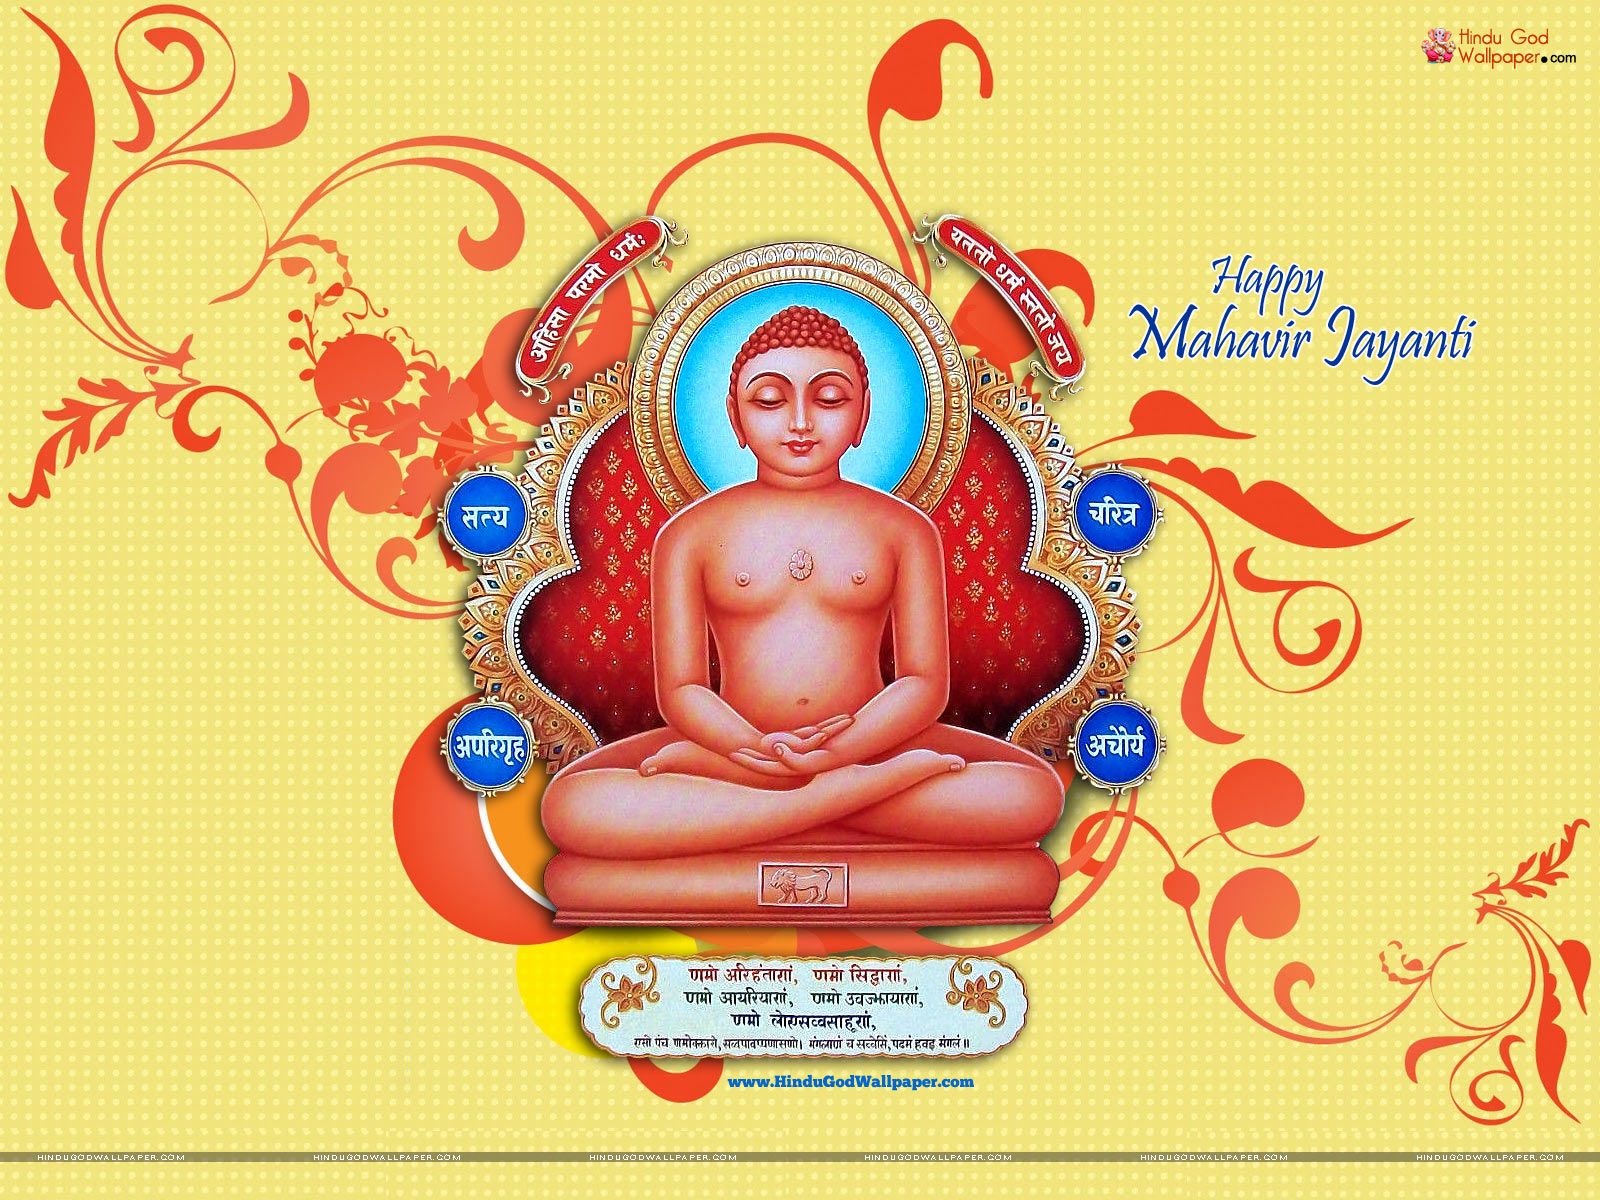 Happy Mahavir Jayanti Wallpaper Image And Photos Lord